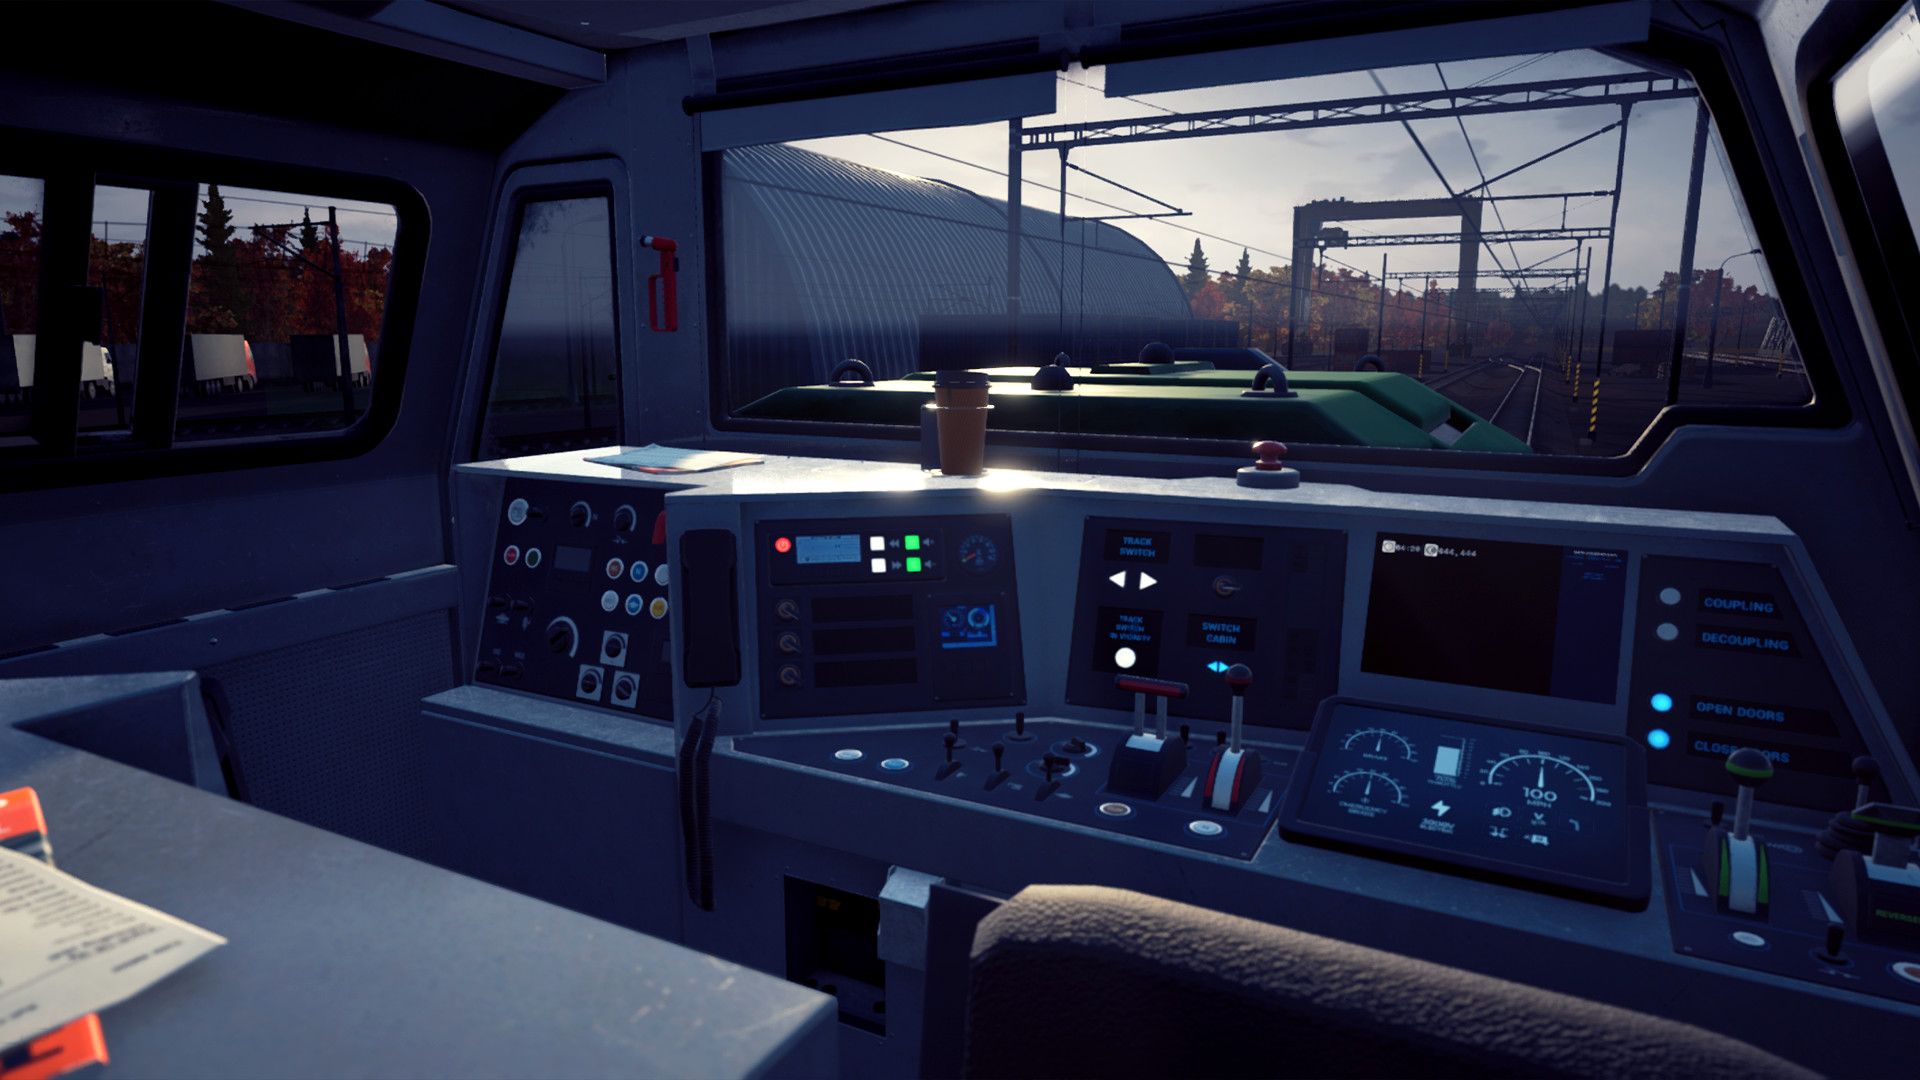 Train Life: A Railway Simulator Steam Account 4.52 USD